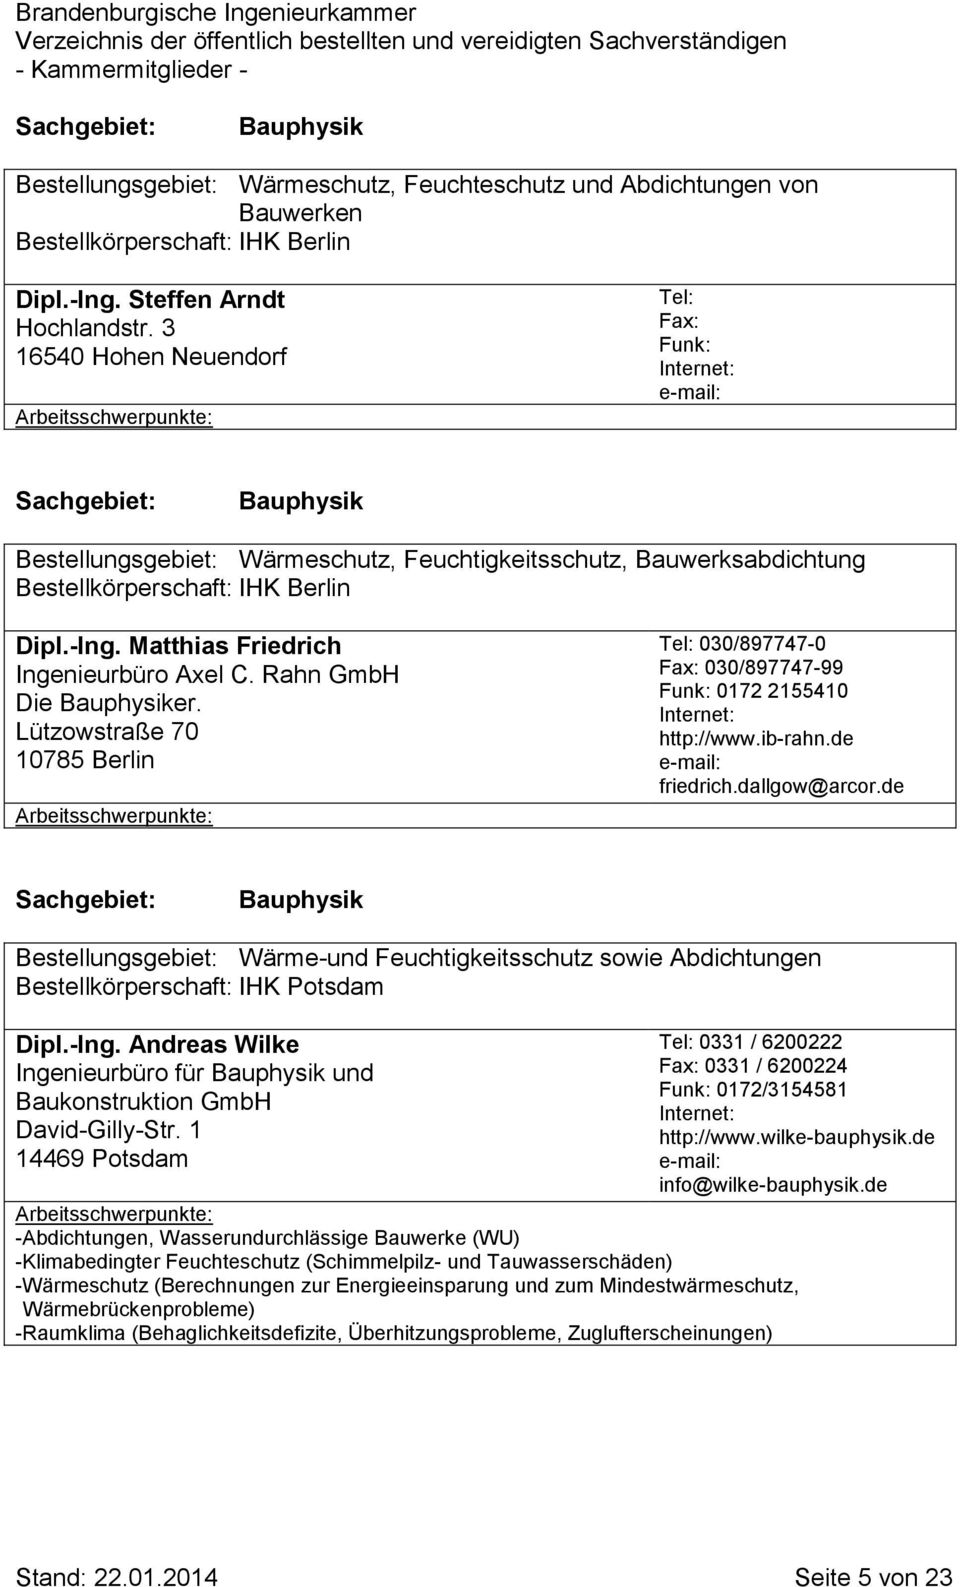 Rahn GmbH Die Bauphysiker. Lützowstraße 70 10785 Berlin Tel: 030/897747-0 Fax: 030/897747-99 0172 2155410 http://www.ib-rahn.de friedrich.dallgow@arcor.